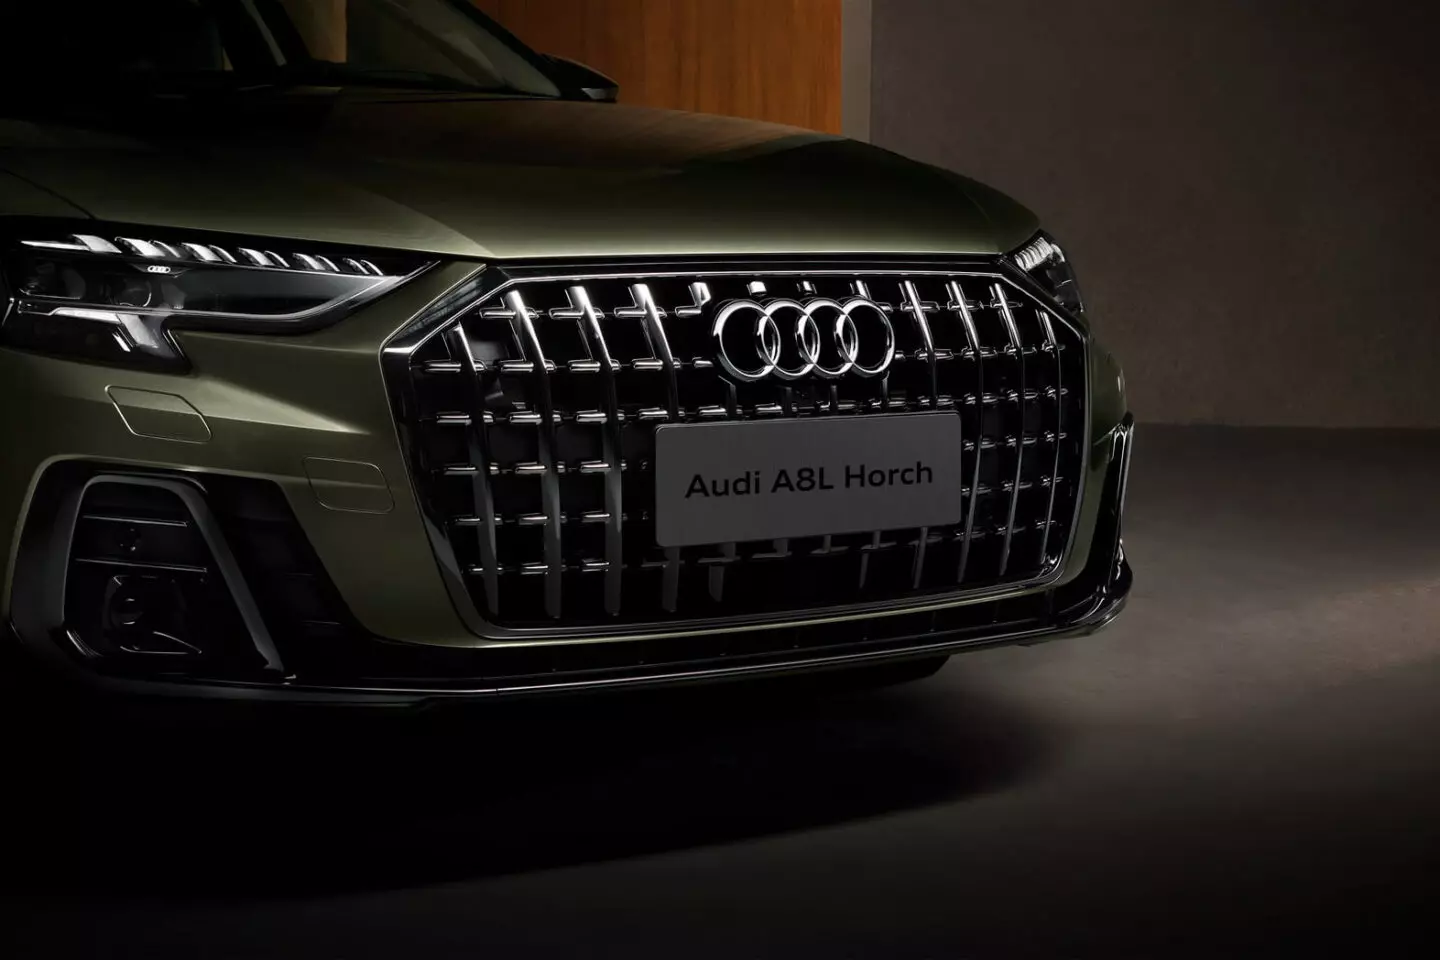 “Audi A8 L Horch”